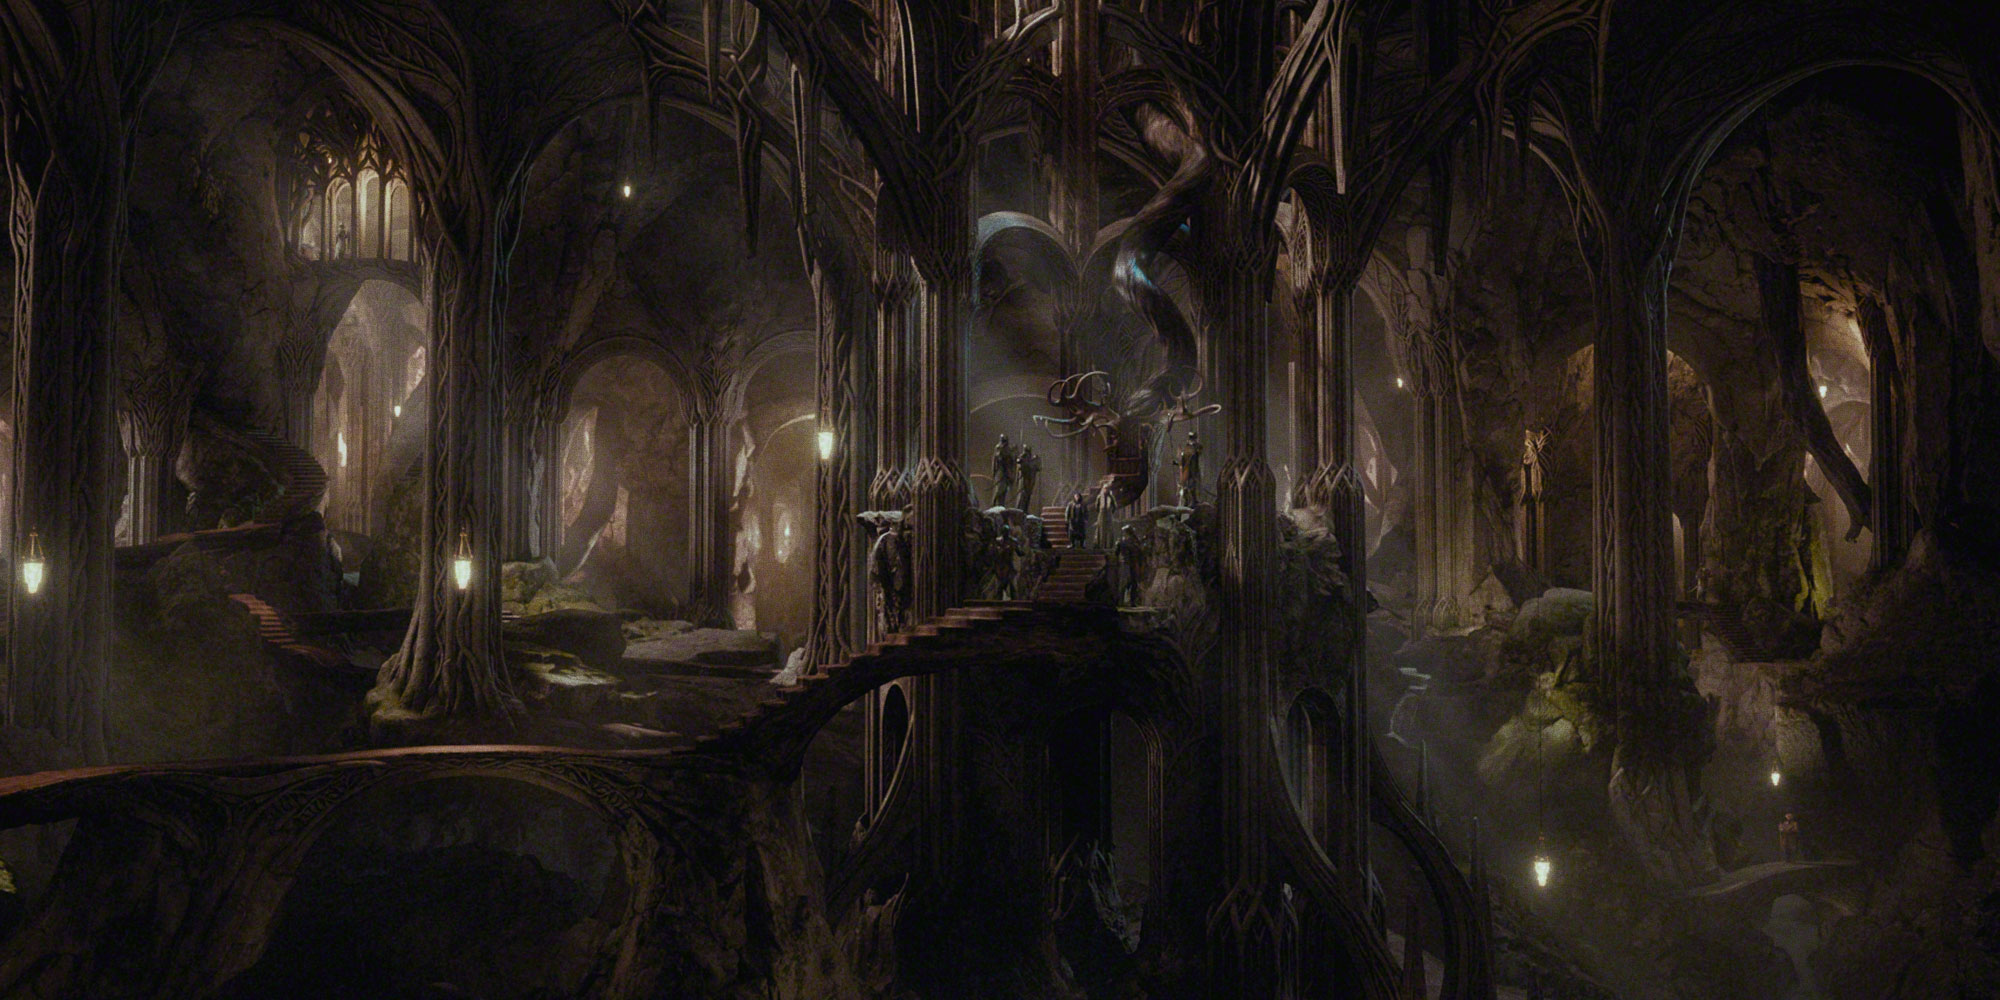 The Bridge of Khazad-dûm, Age of the Ring Mod Wiki